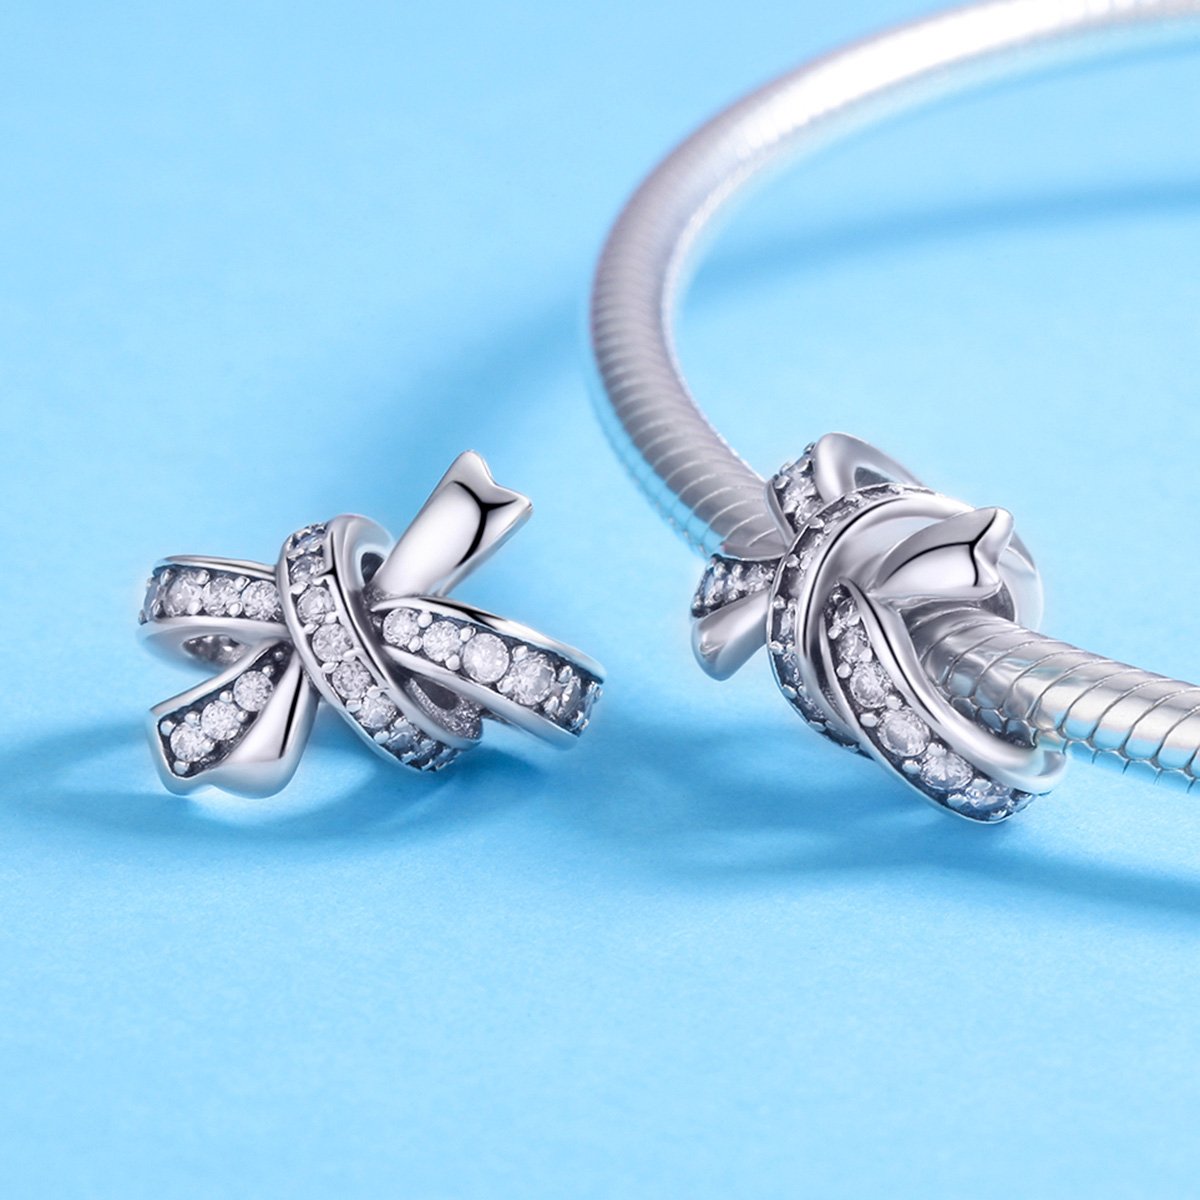 Sterling 925 silver charm the tie pendant fits Pandora charm and European charm bracelet Xaxe.com